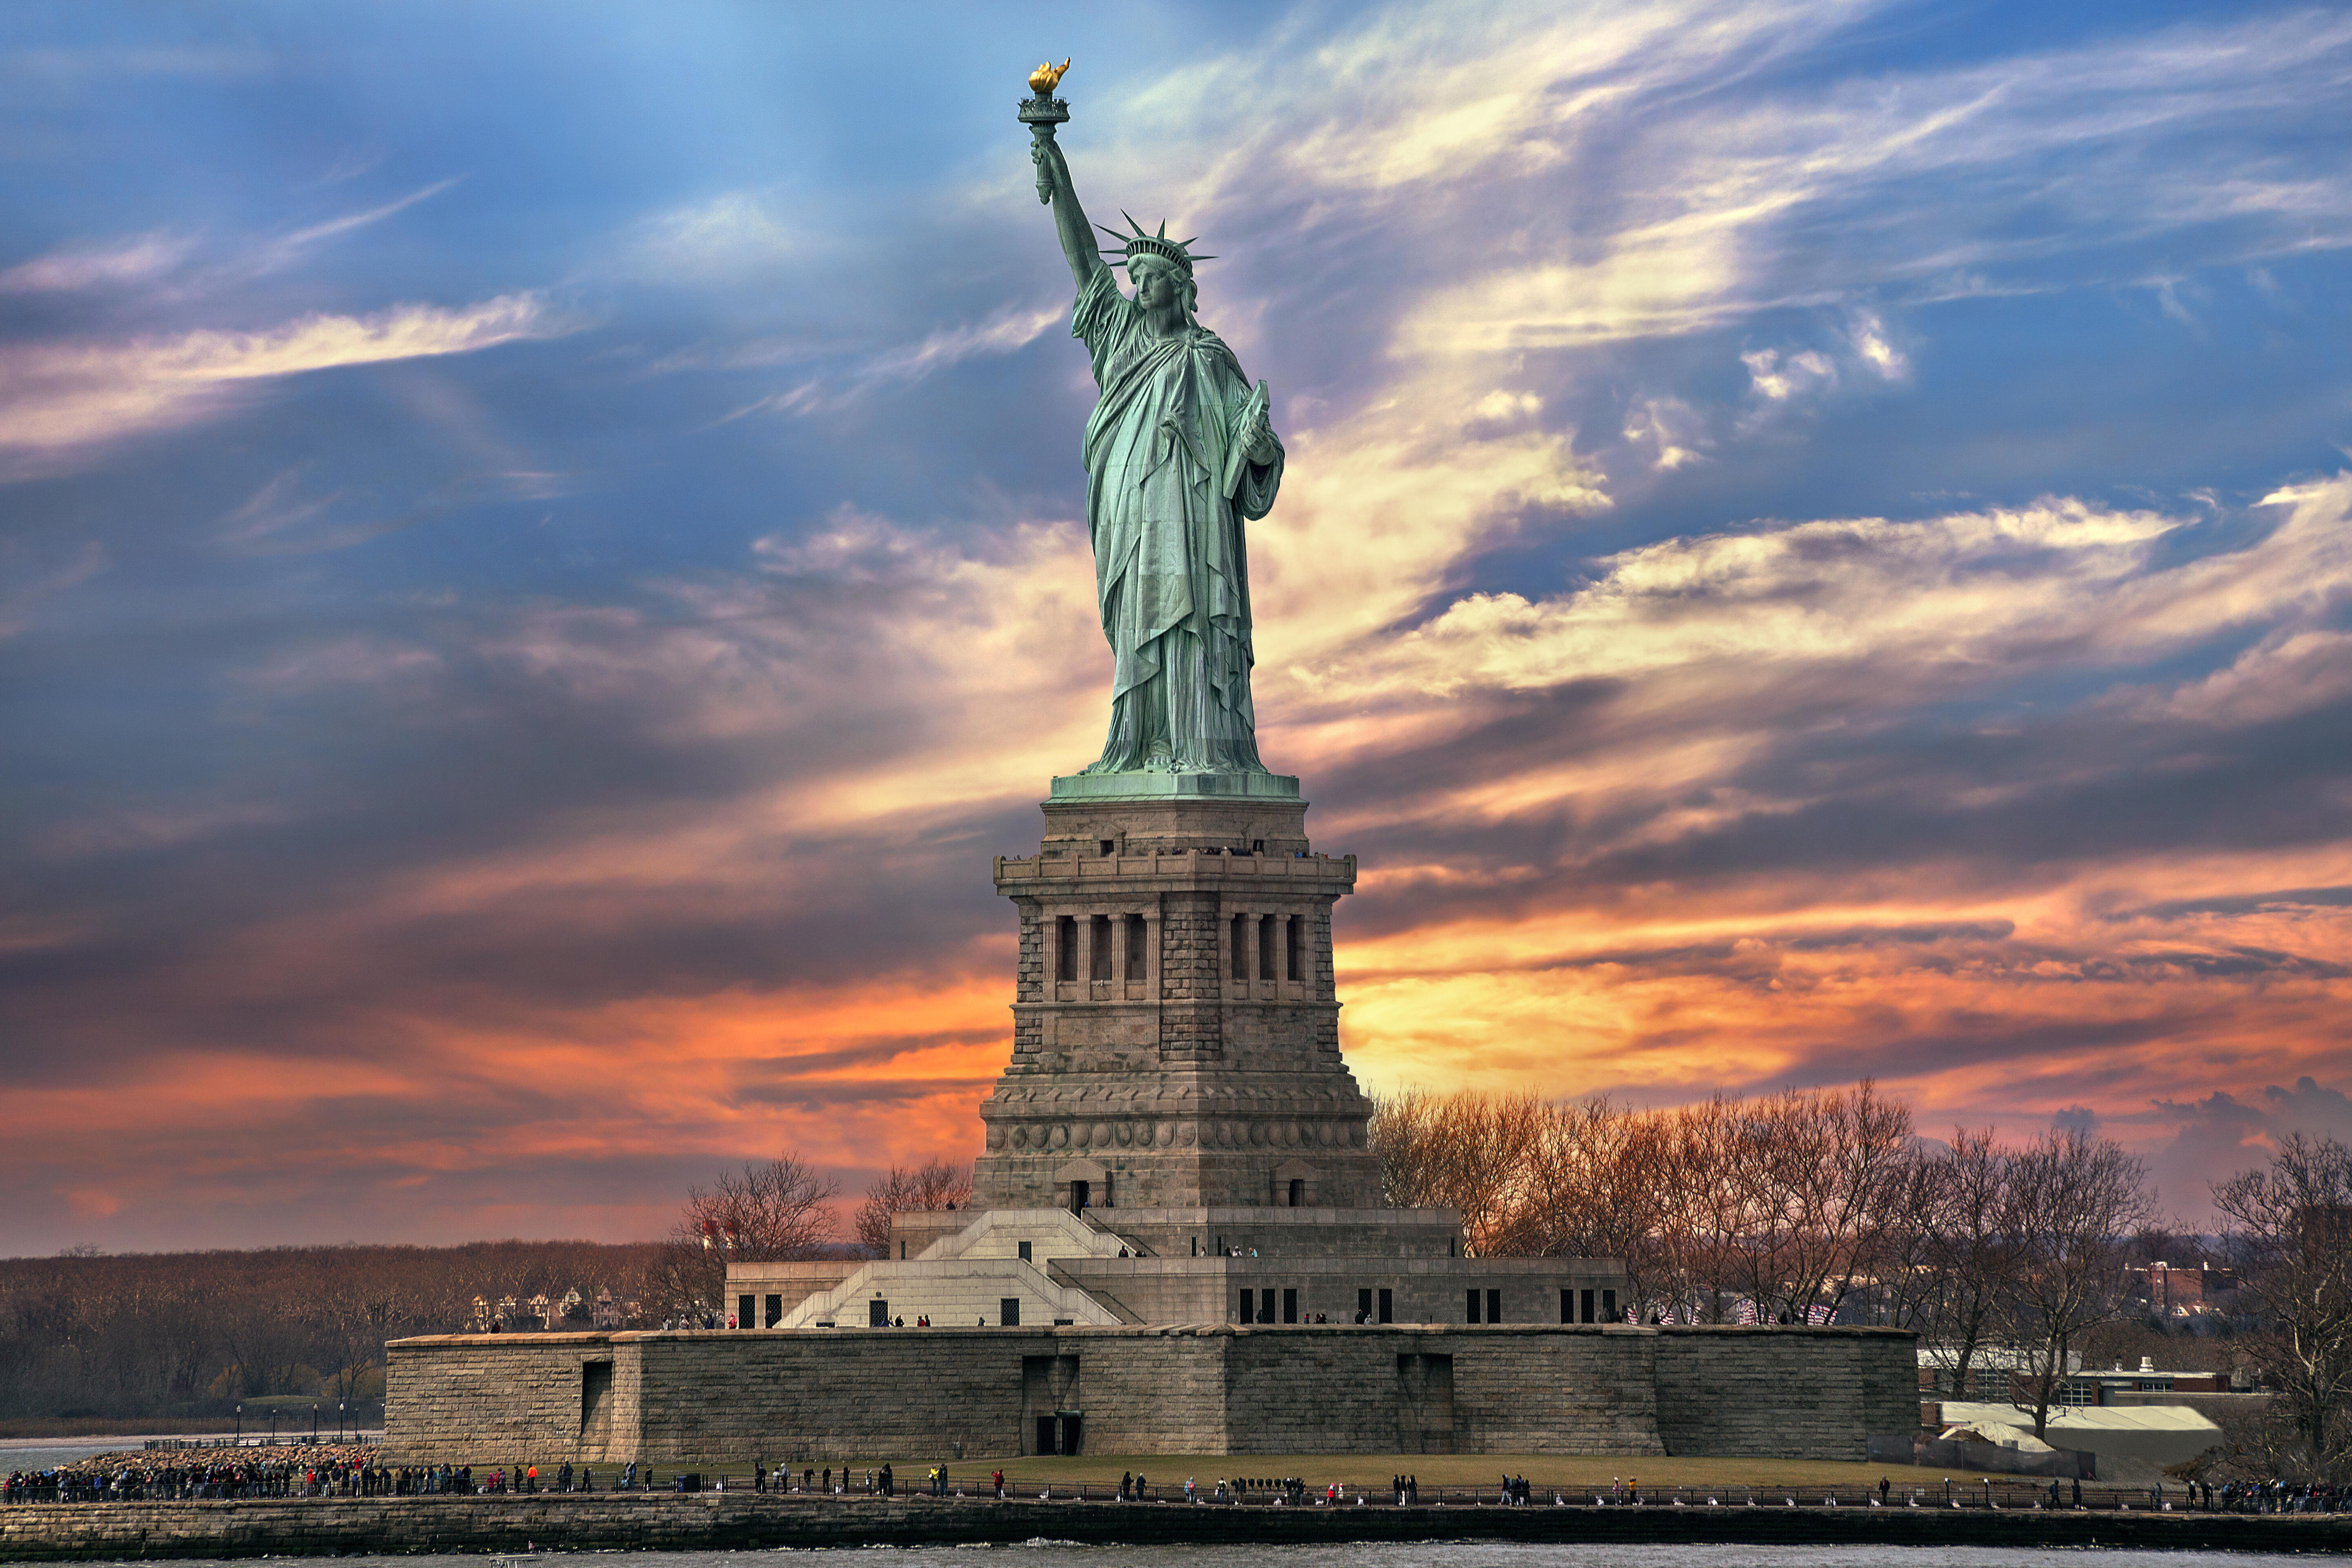 Lady freedom lady liberty. Статуя свободы США. США Нью-Йорк статуя свободы. Нью Йорк стадия свободы. Нью-Йорк бстатуясвободы.